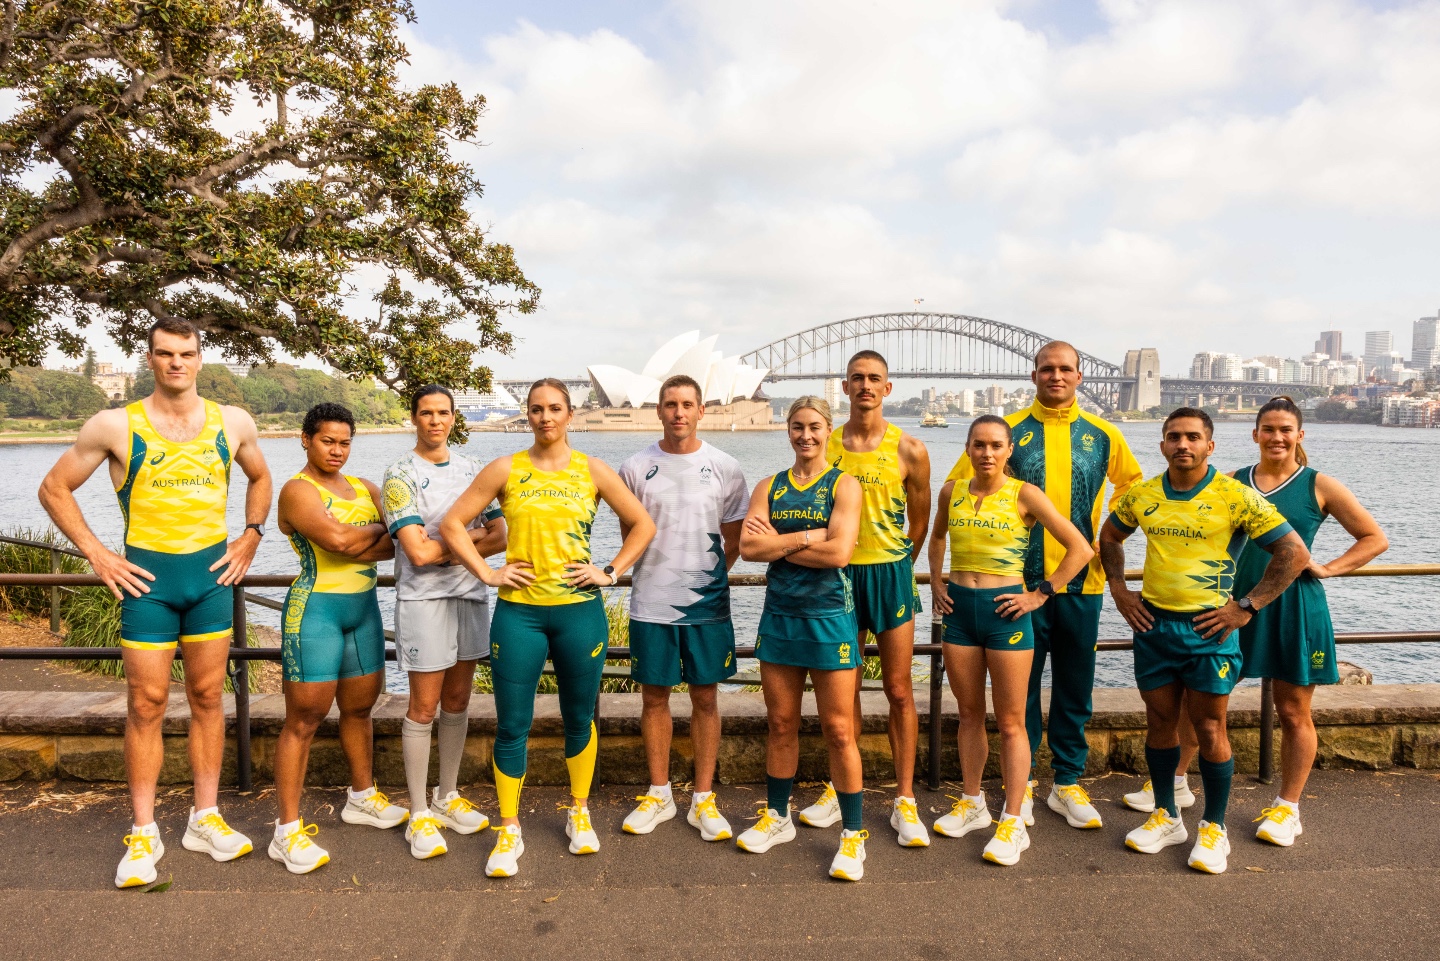 Paris Olympics team uniforms: Australia